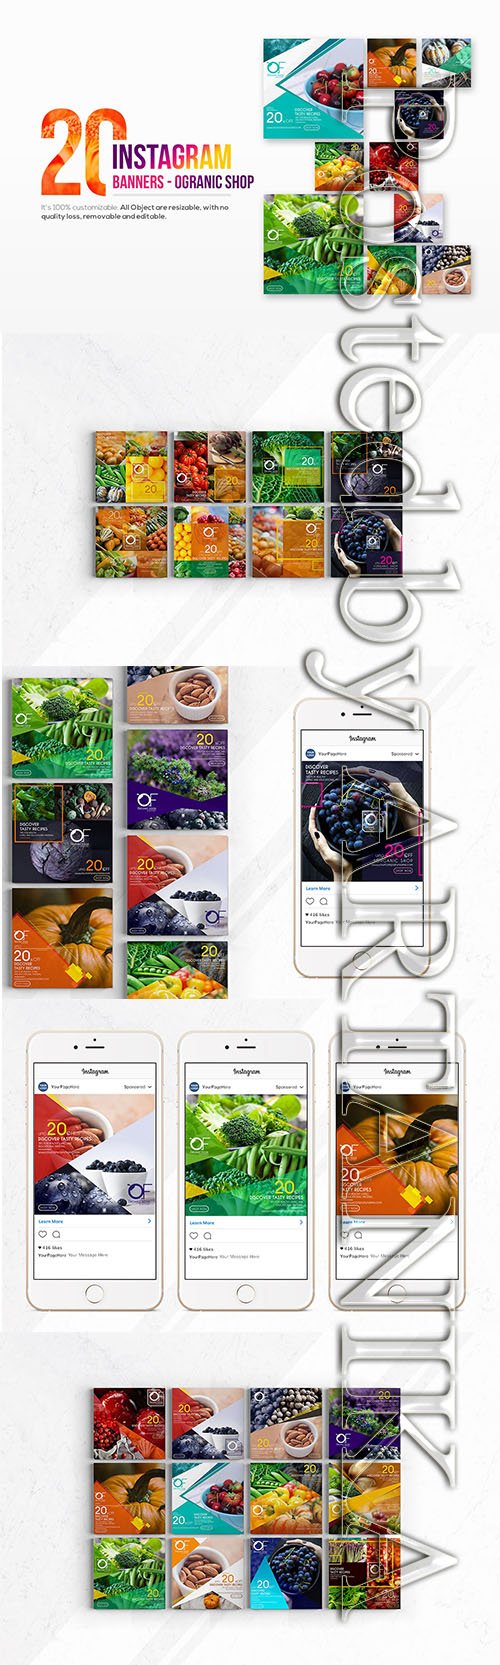 20 Instagram Organic Shop Banners